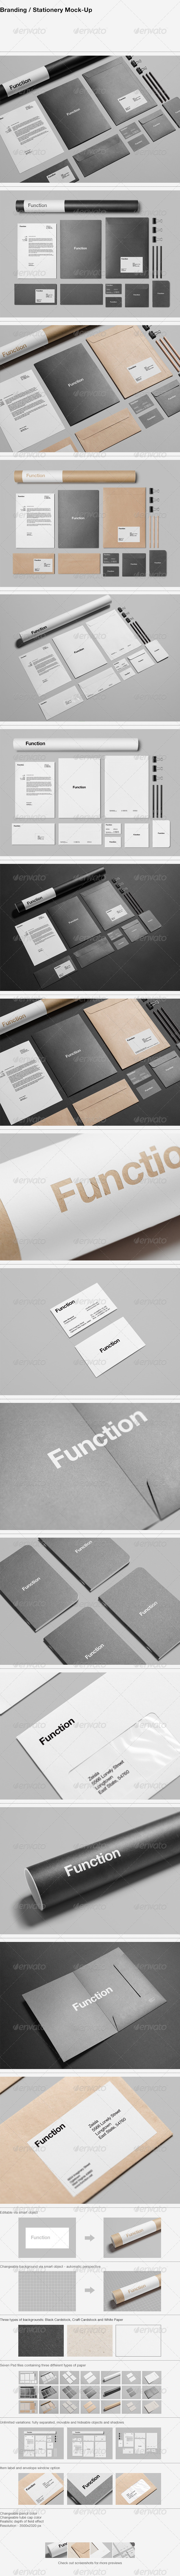 stationery-branding-identity-mock-up-preview.jpg